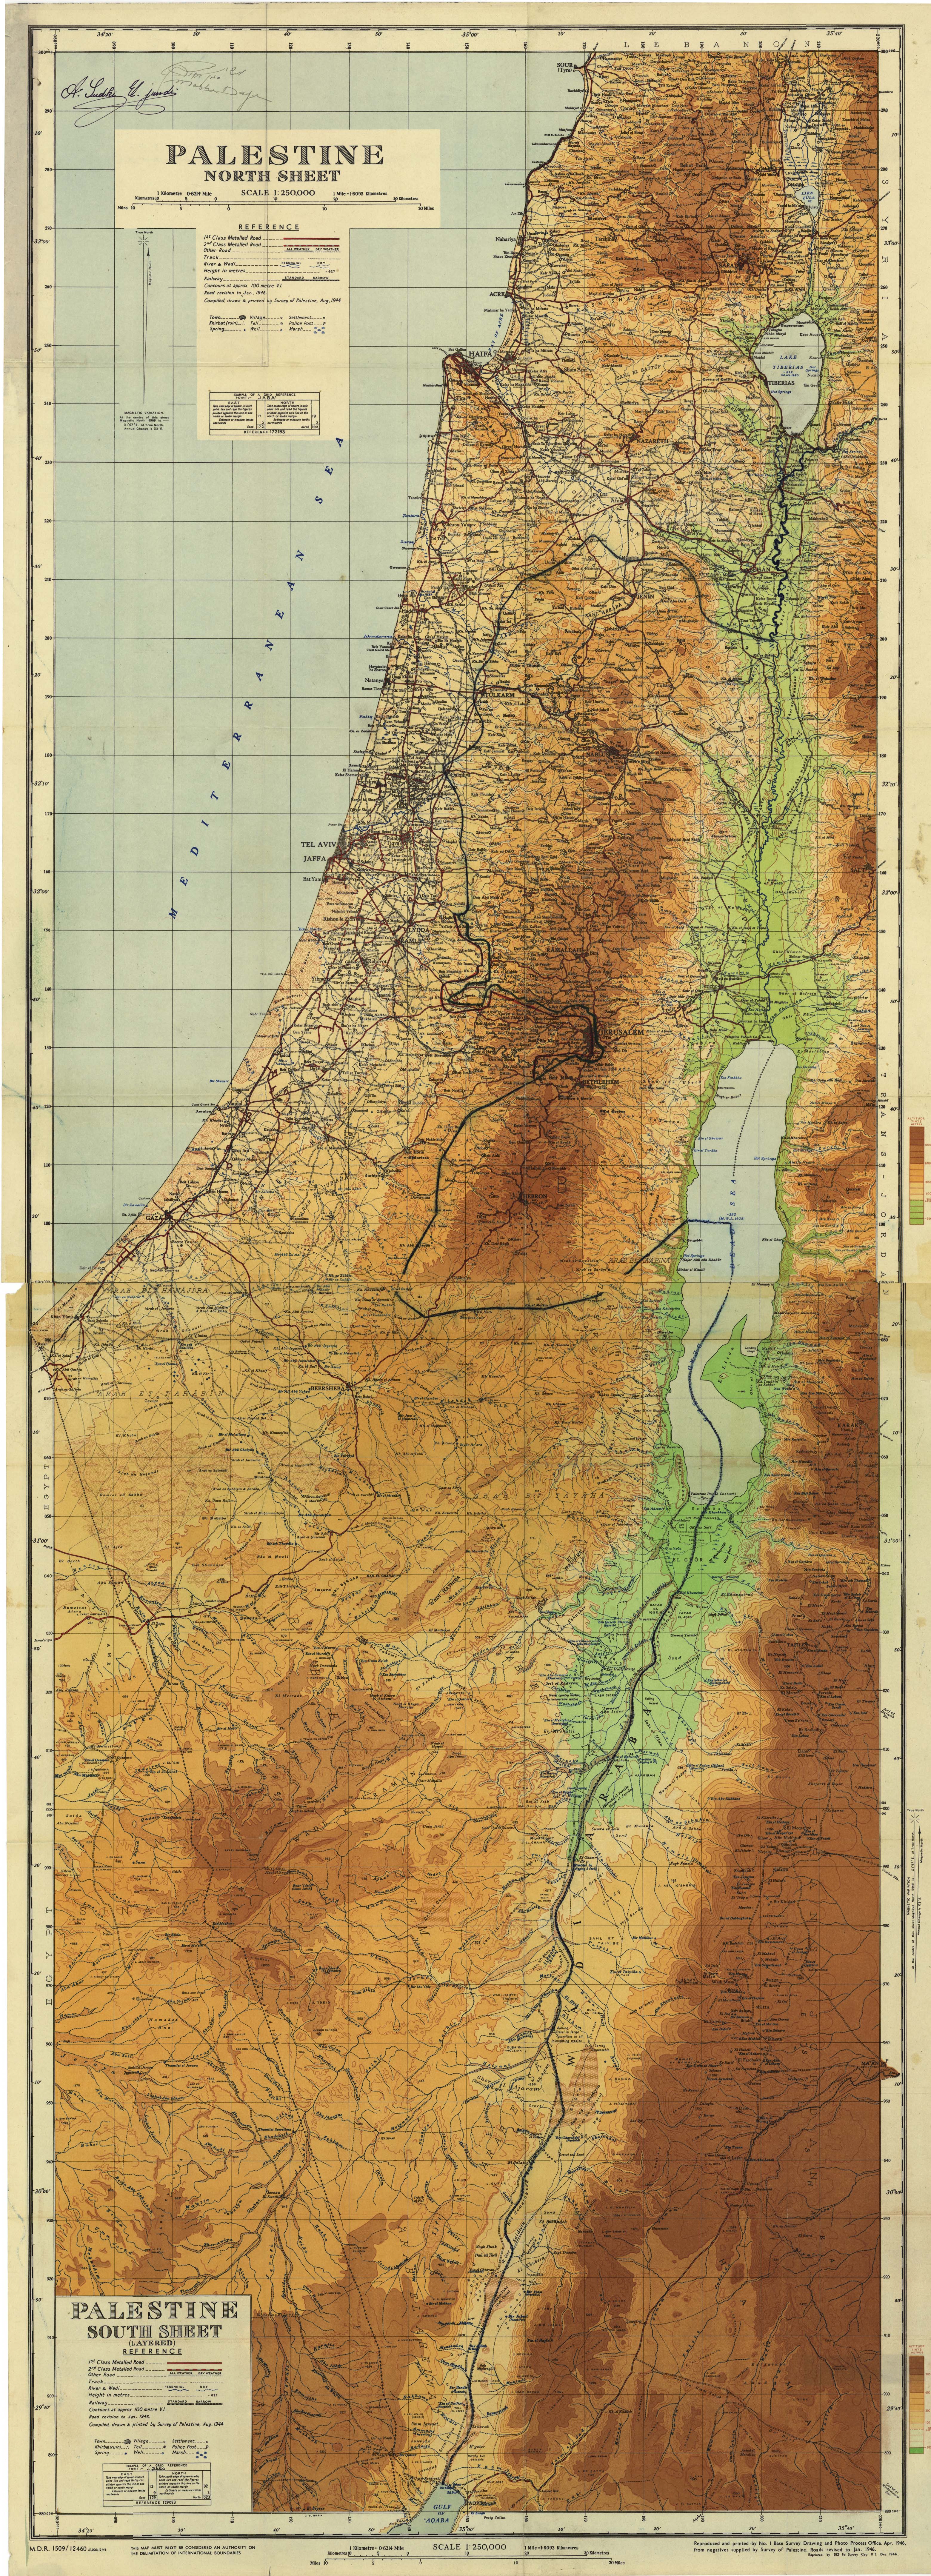 Israel-Jordan Armistice Agreement - Original Green Line Map - English (1949)